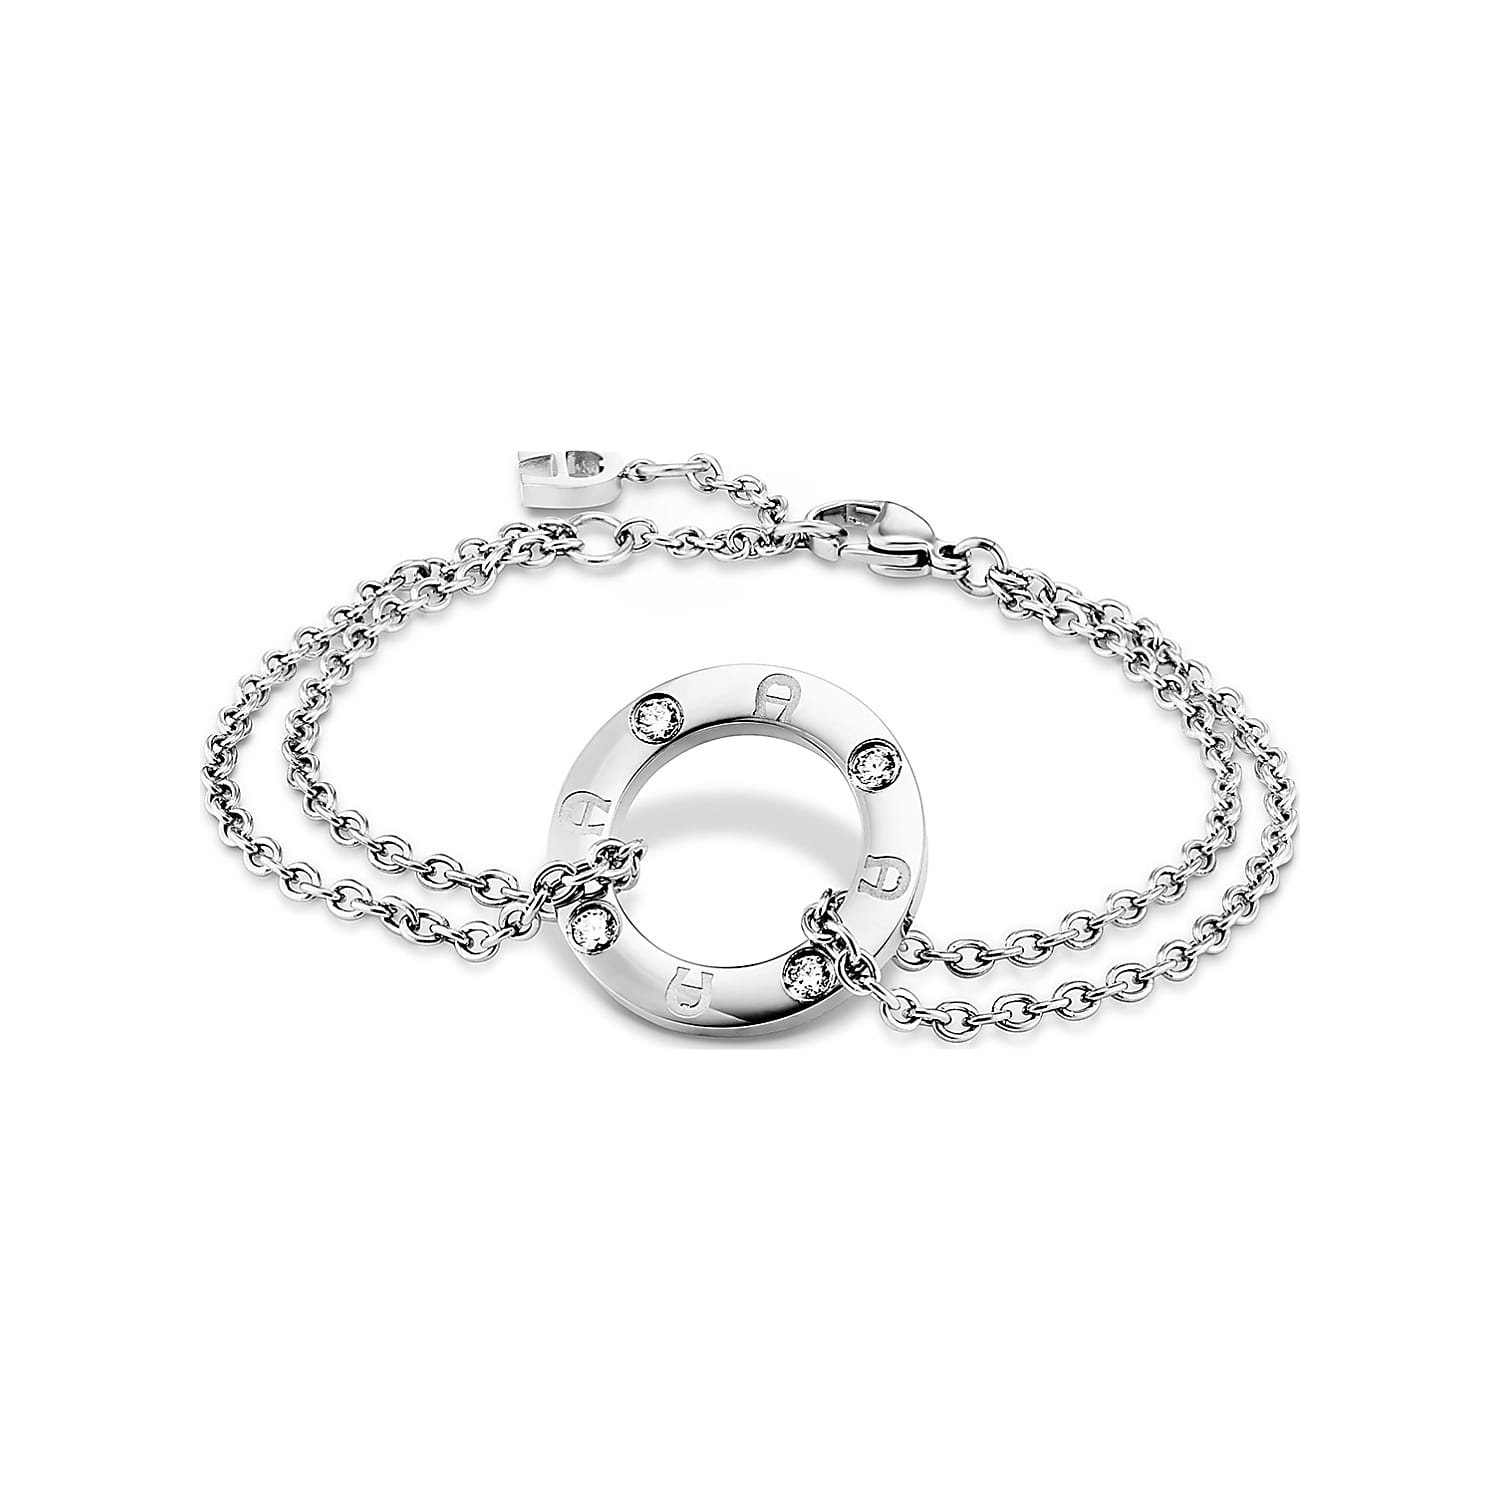 Bracelet with ring pendant